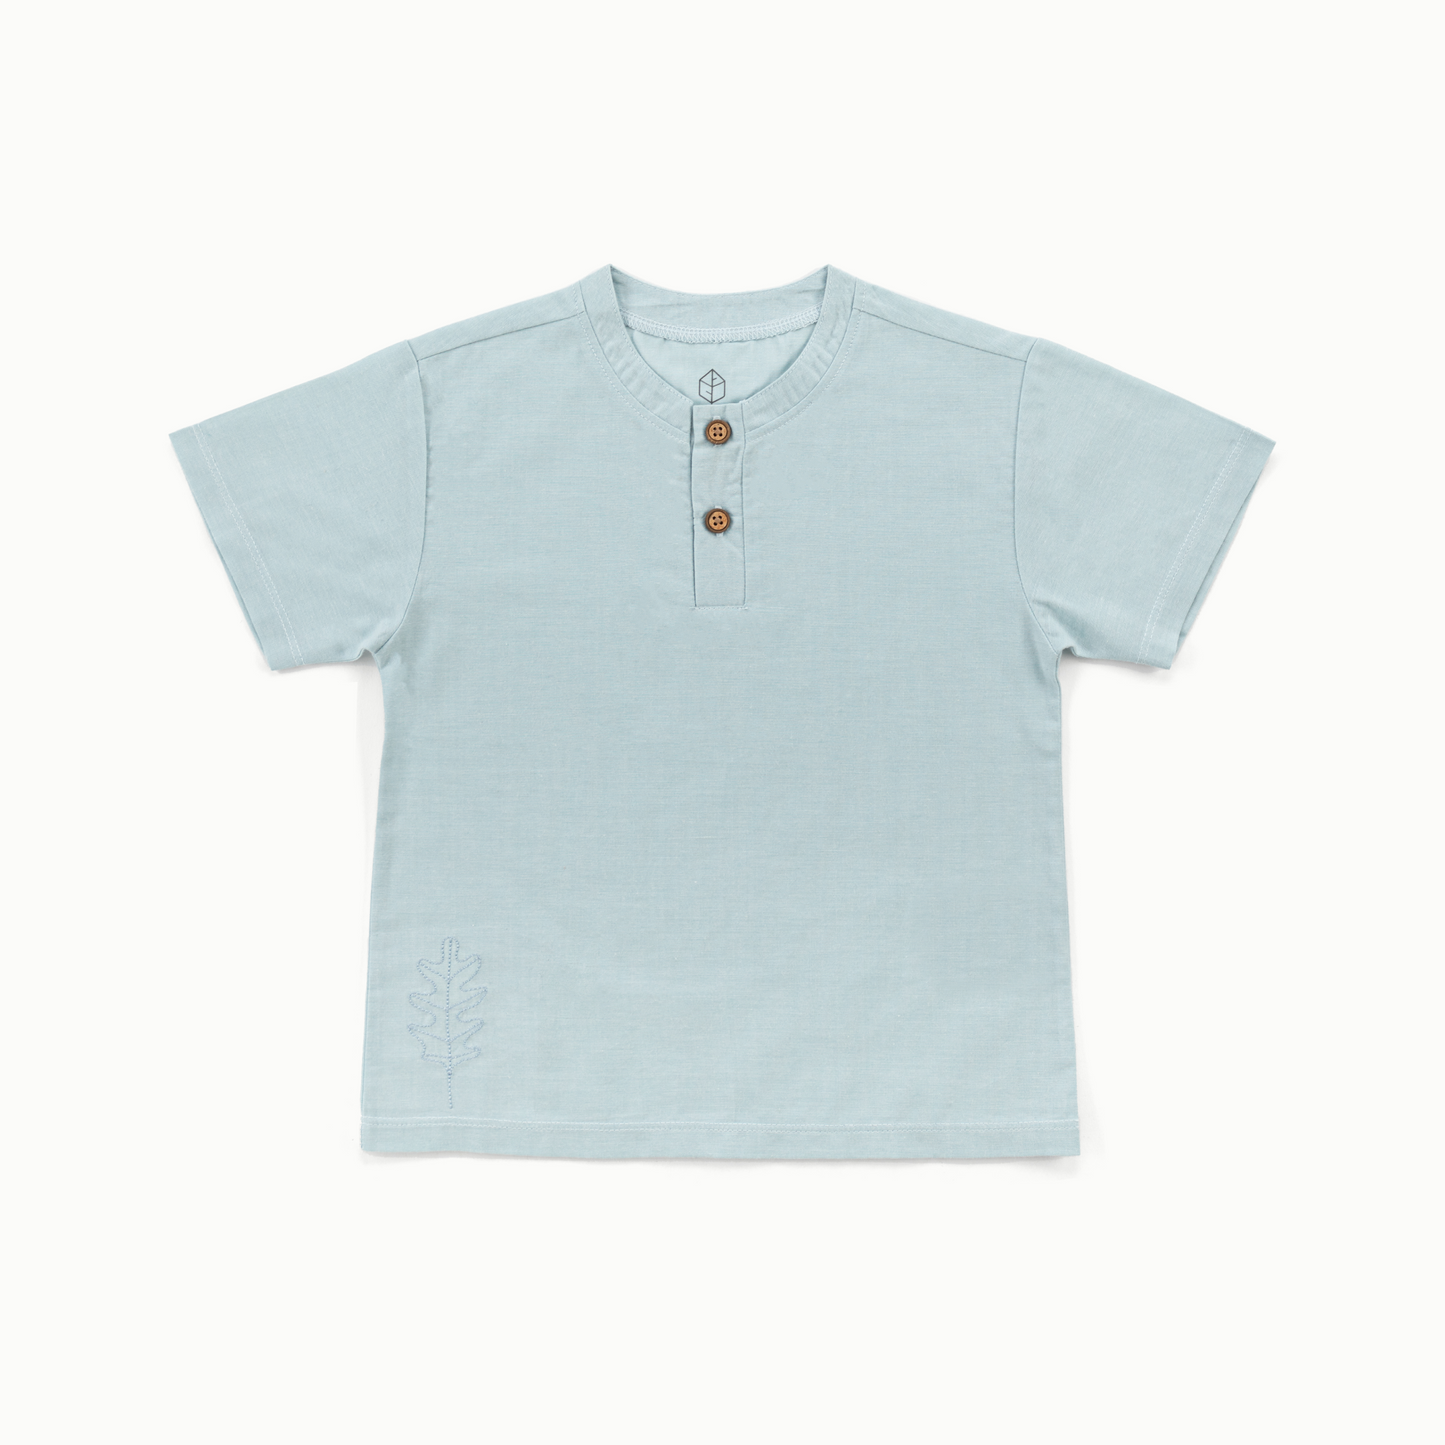 Oak Henley cotton t-shirt- Sleepy Blue